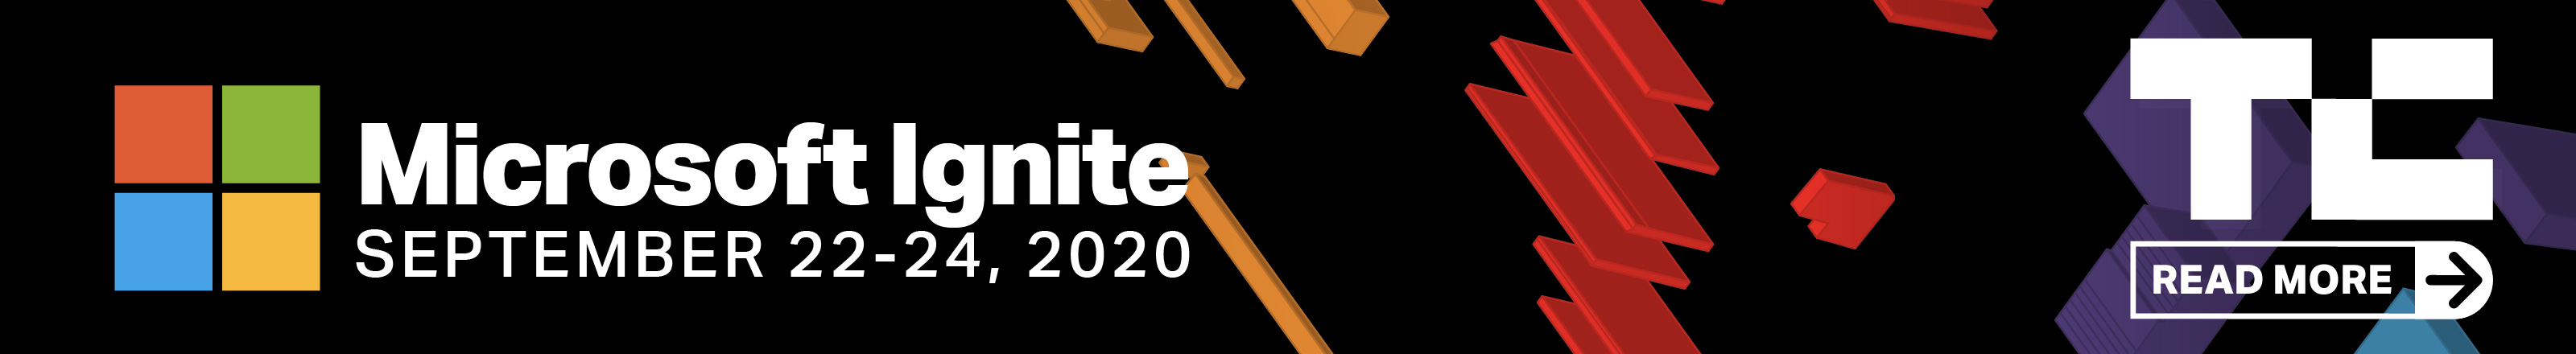 microsoft-ignite-2020-banner.jpg